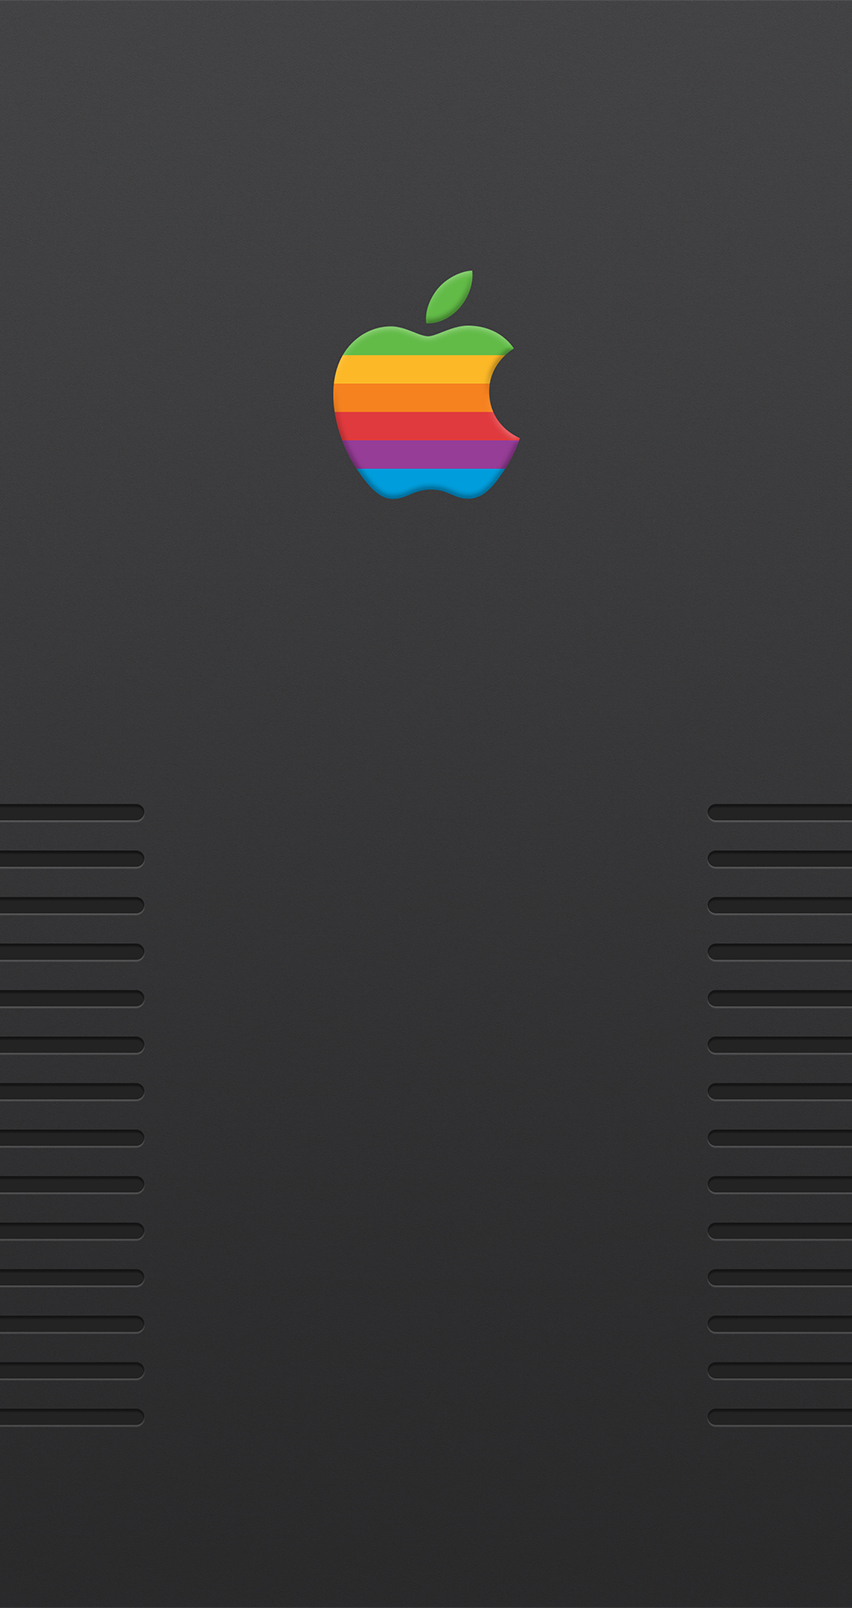 Retro Apple For Iphone, Ipad, Mac, And Apple Watch - Retro Apple Wallpaper Iphone - HD Wallpaper 